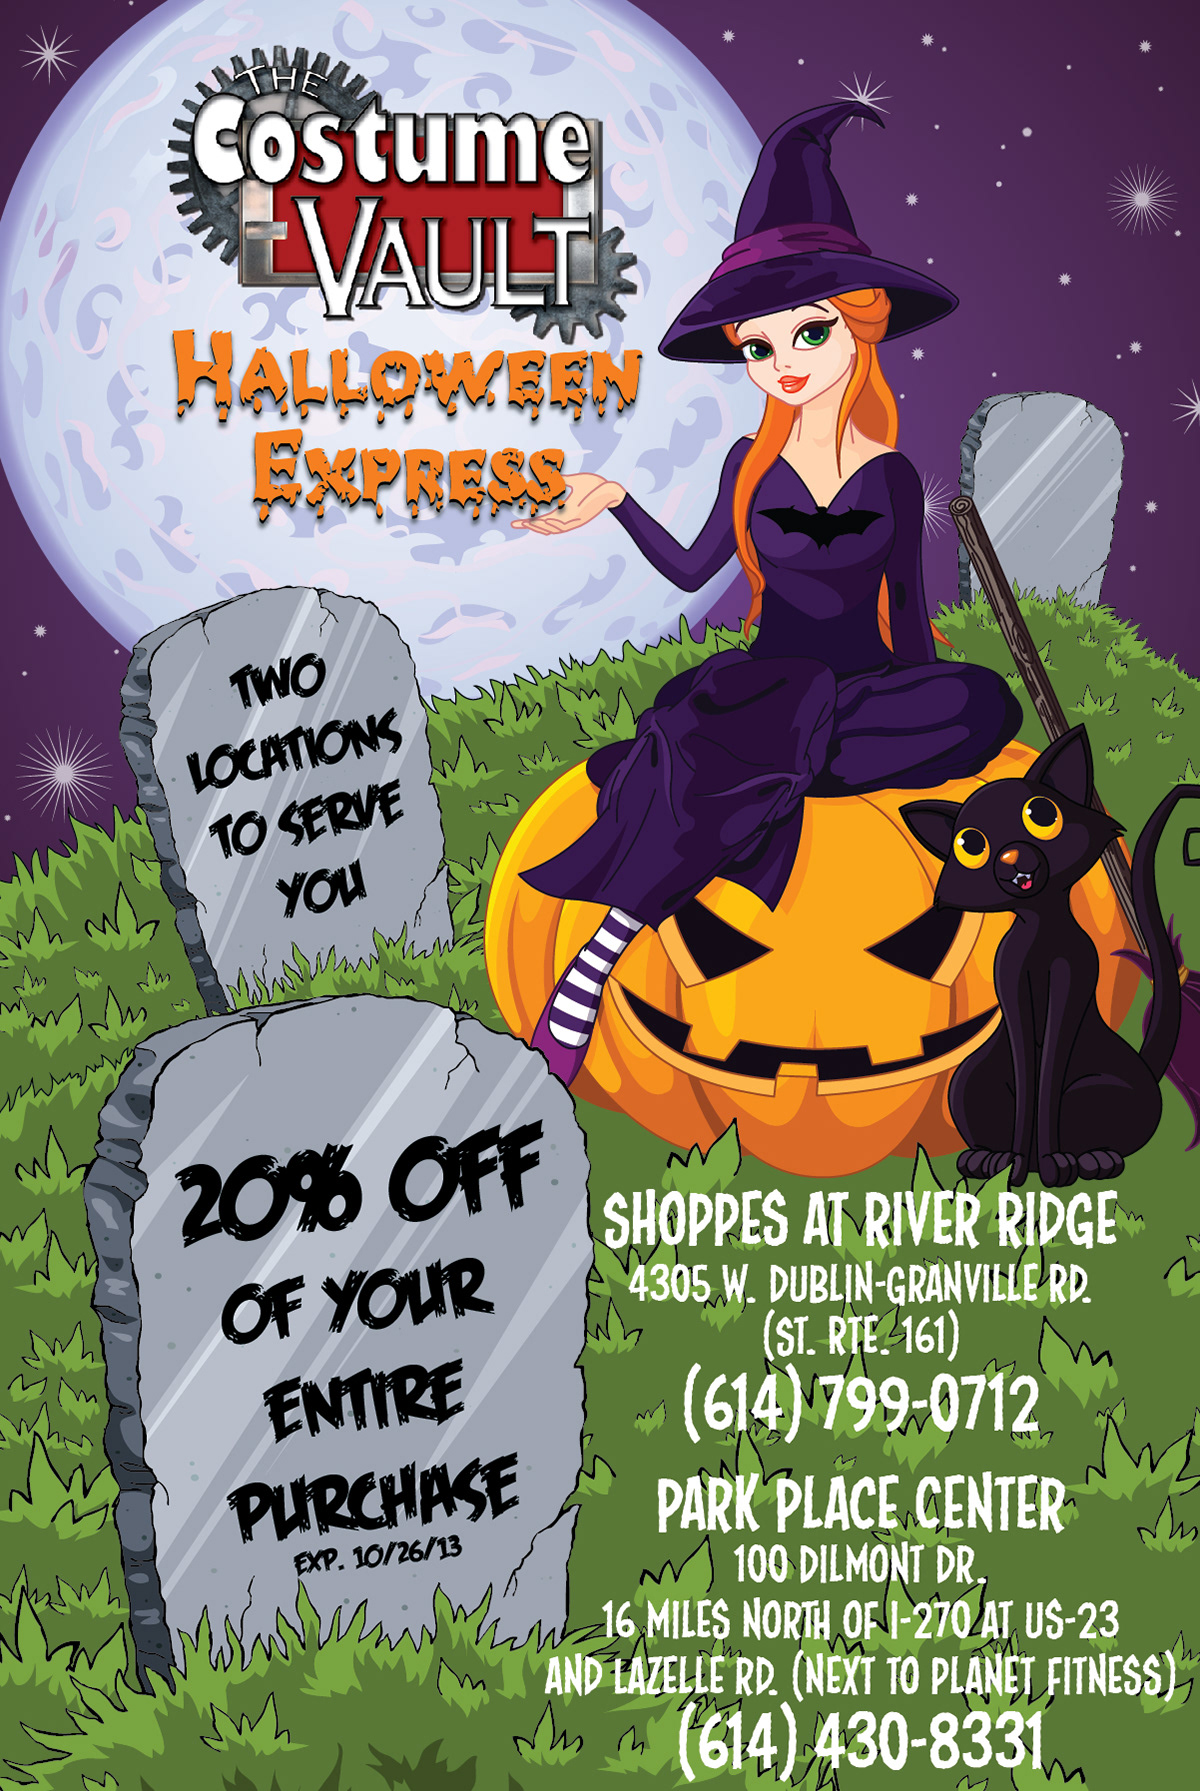 Halloween halloween express Costume Vault print witch Black Cat cartoon